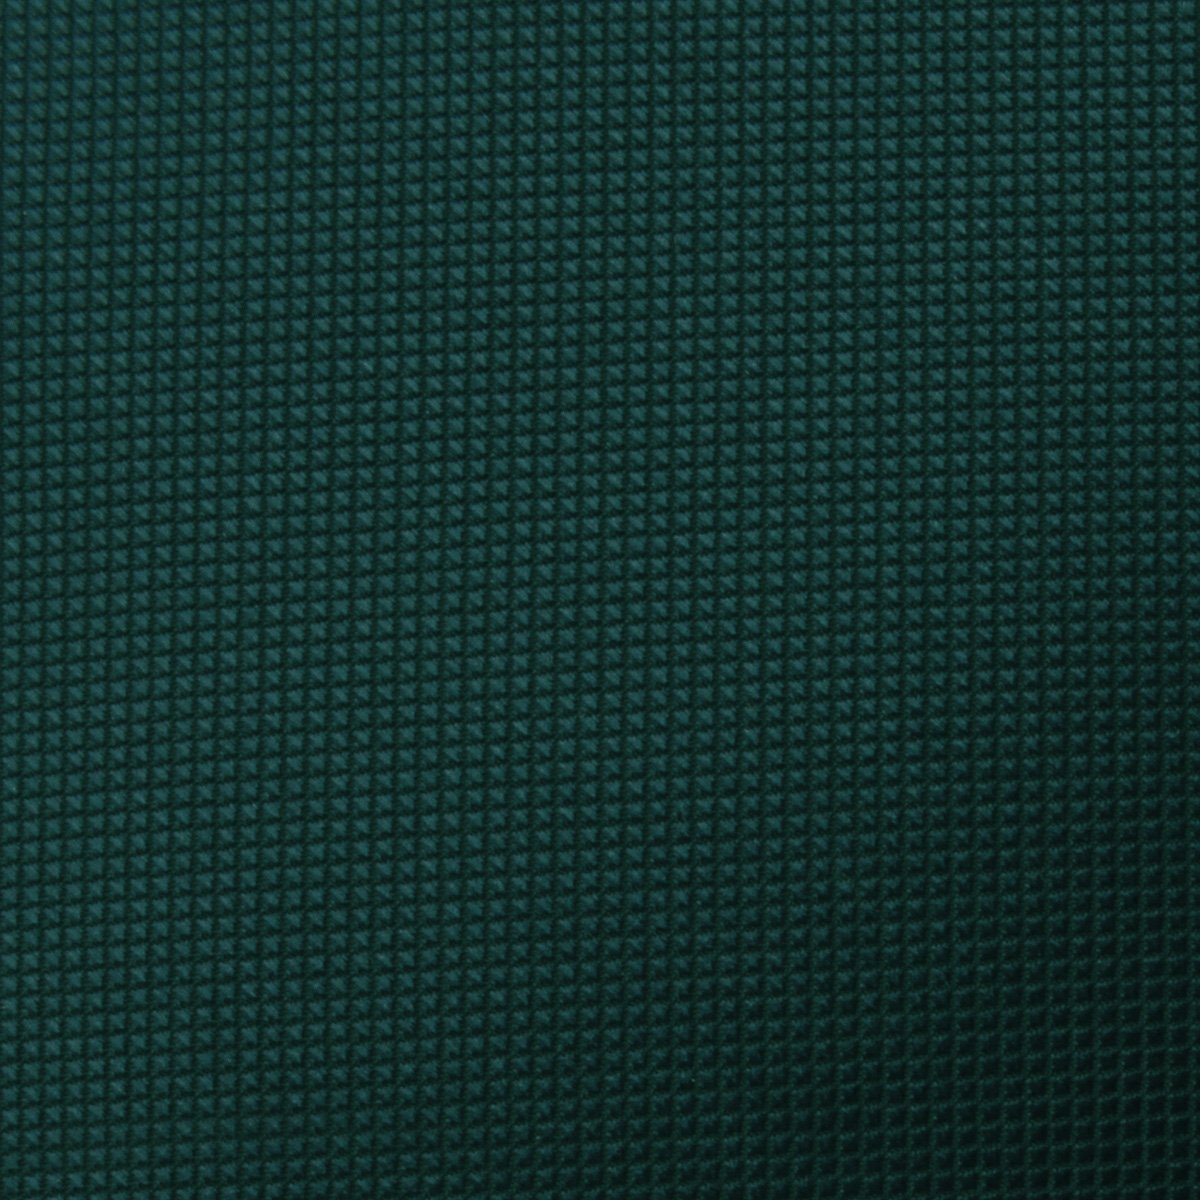 Venice Dark Green Diamond Pocket Square Fabric